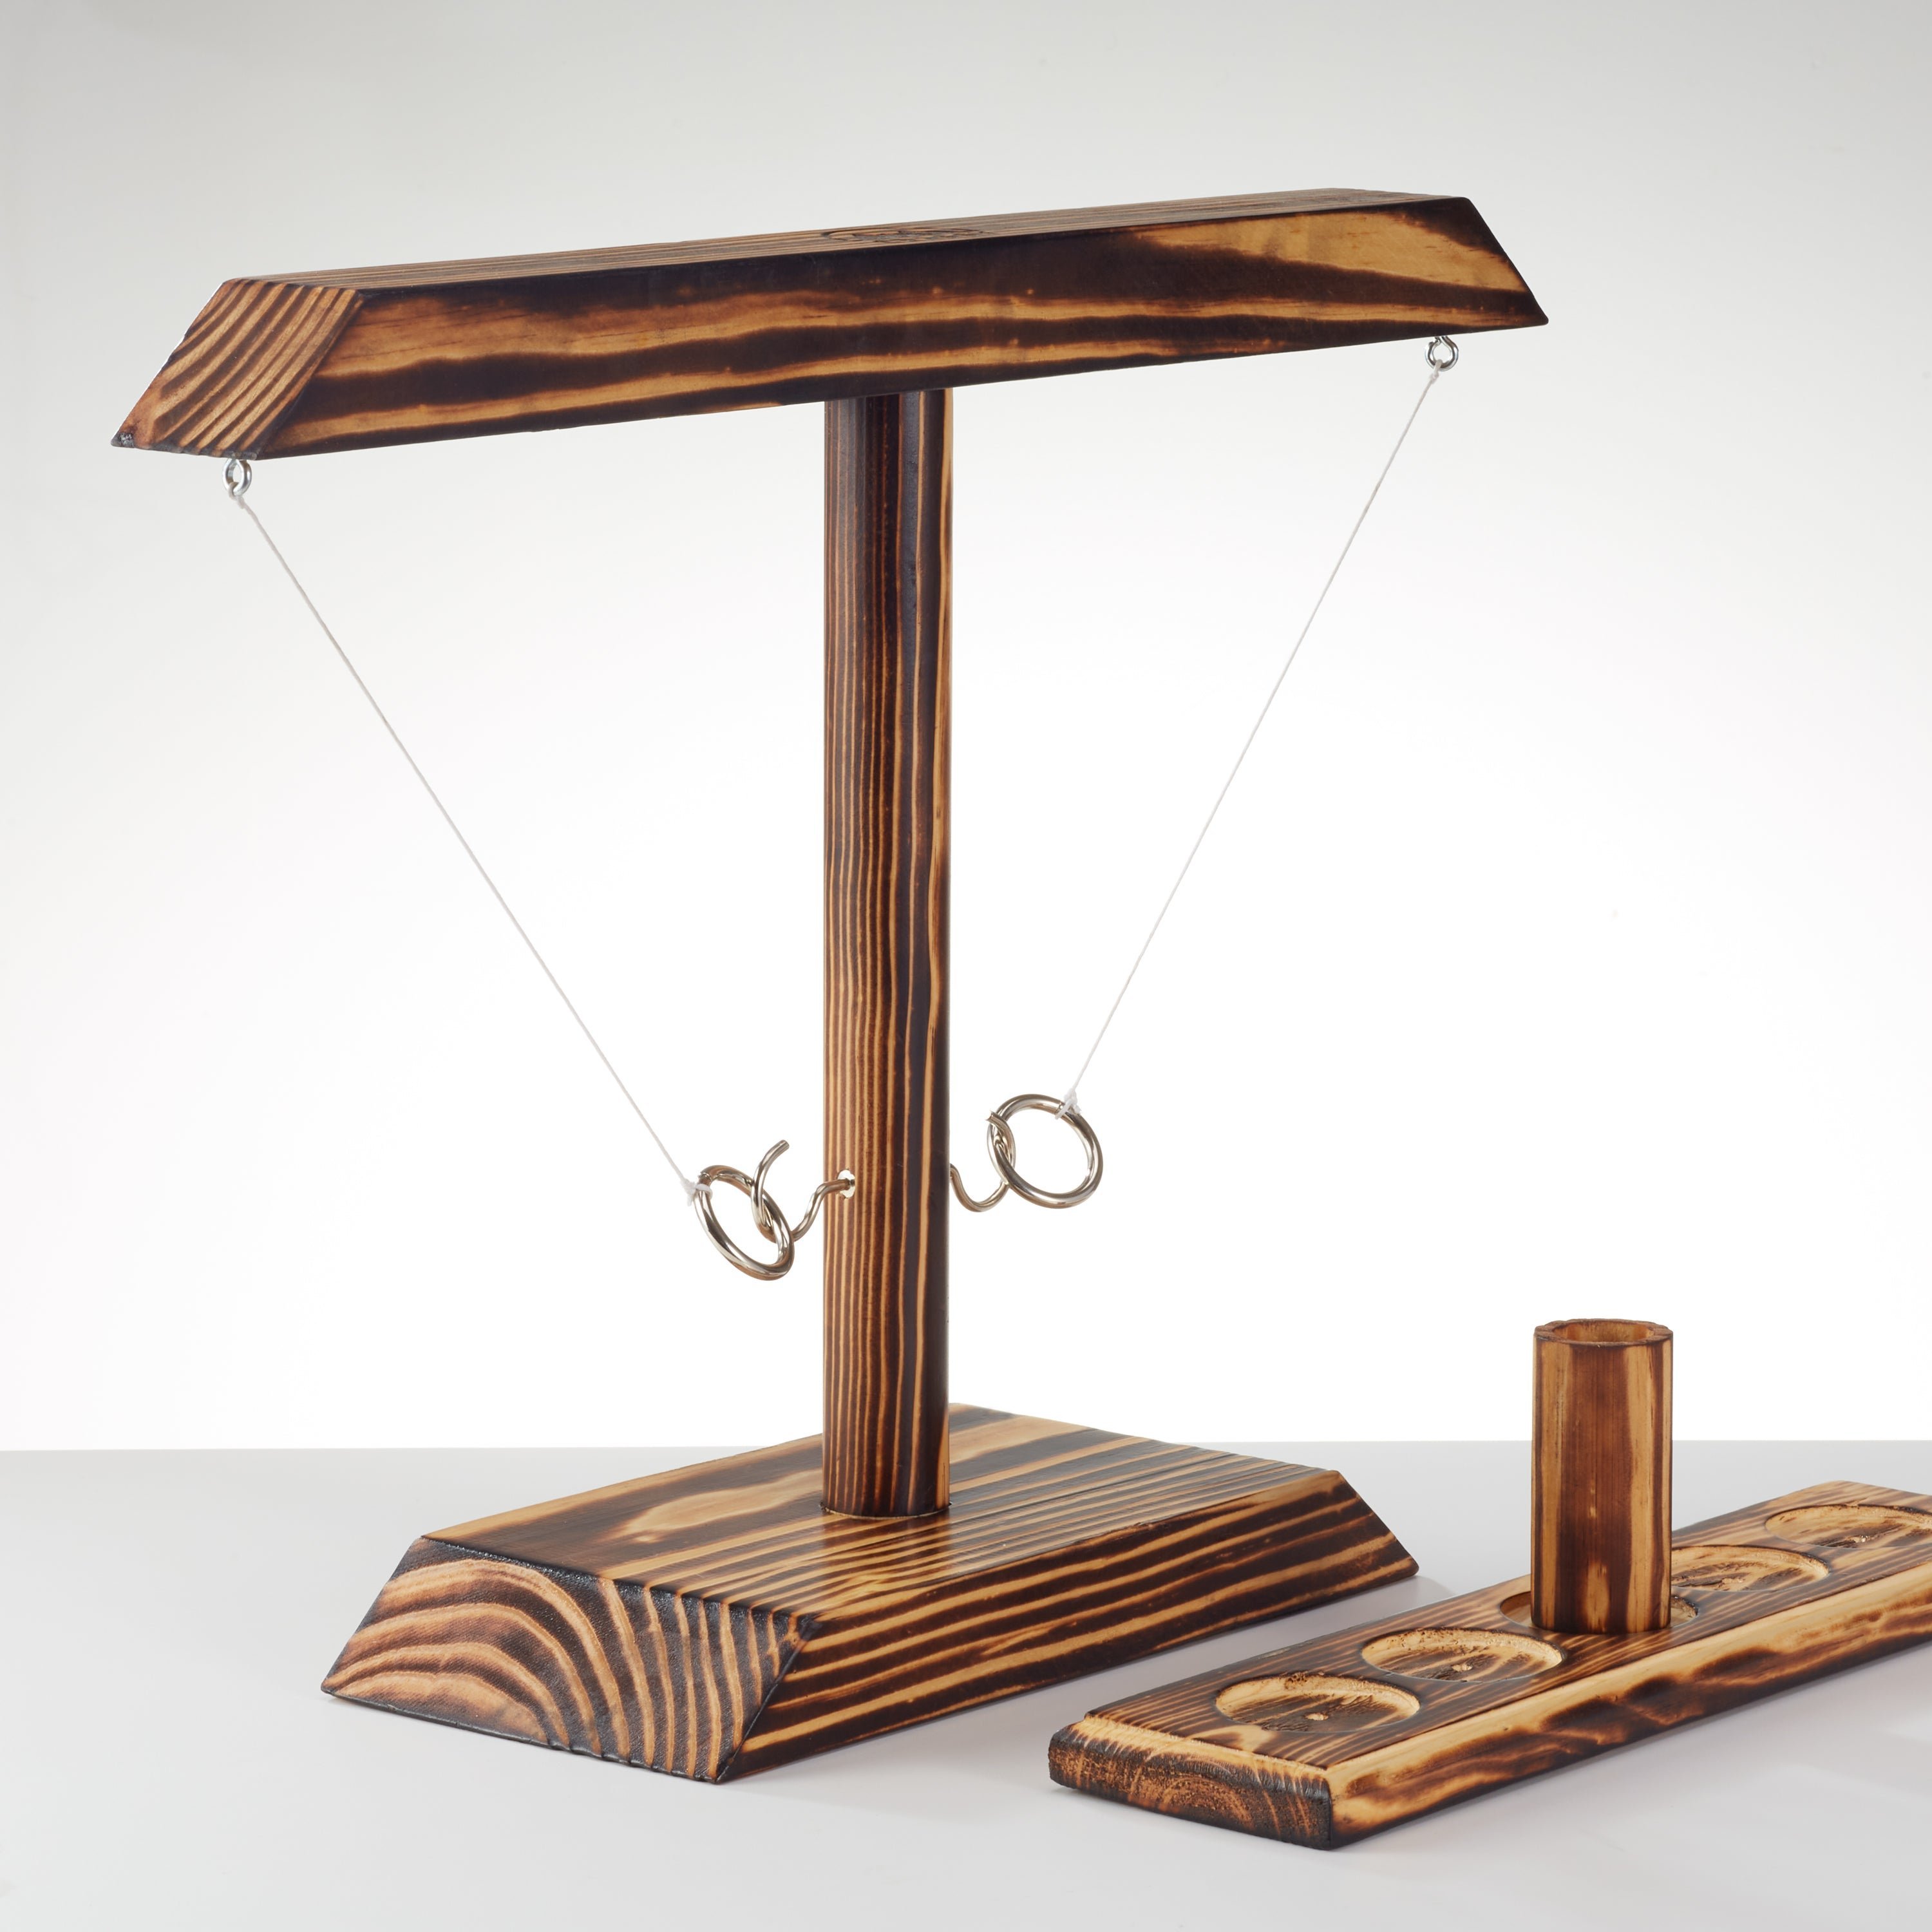 🔥Summer Sale - 48% OFF🔥 HOOKS! Handmade Wooden Ring Toss Game